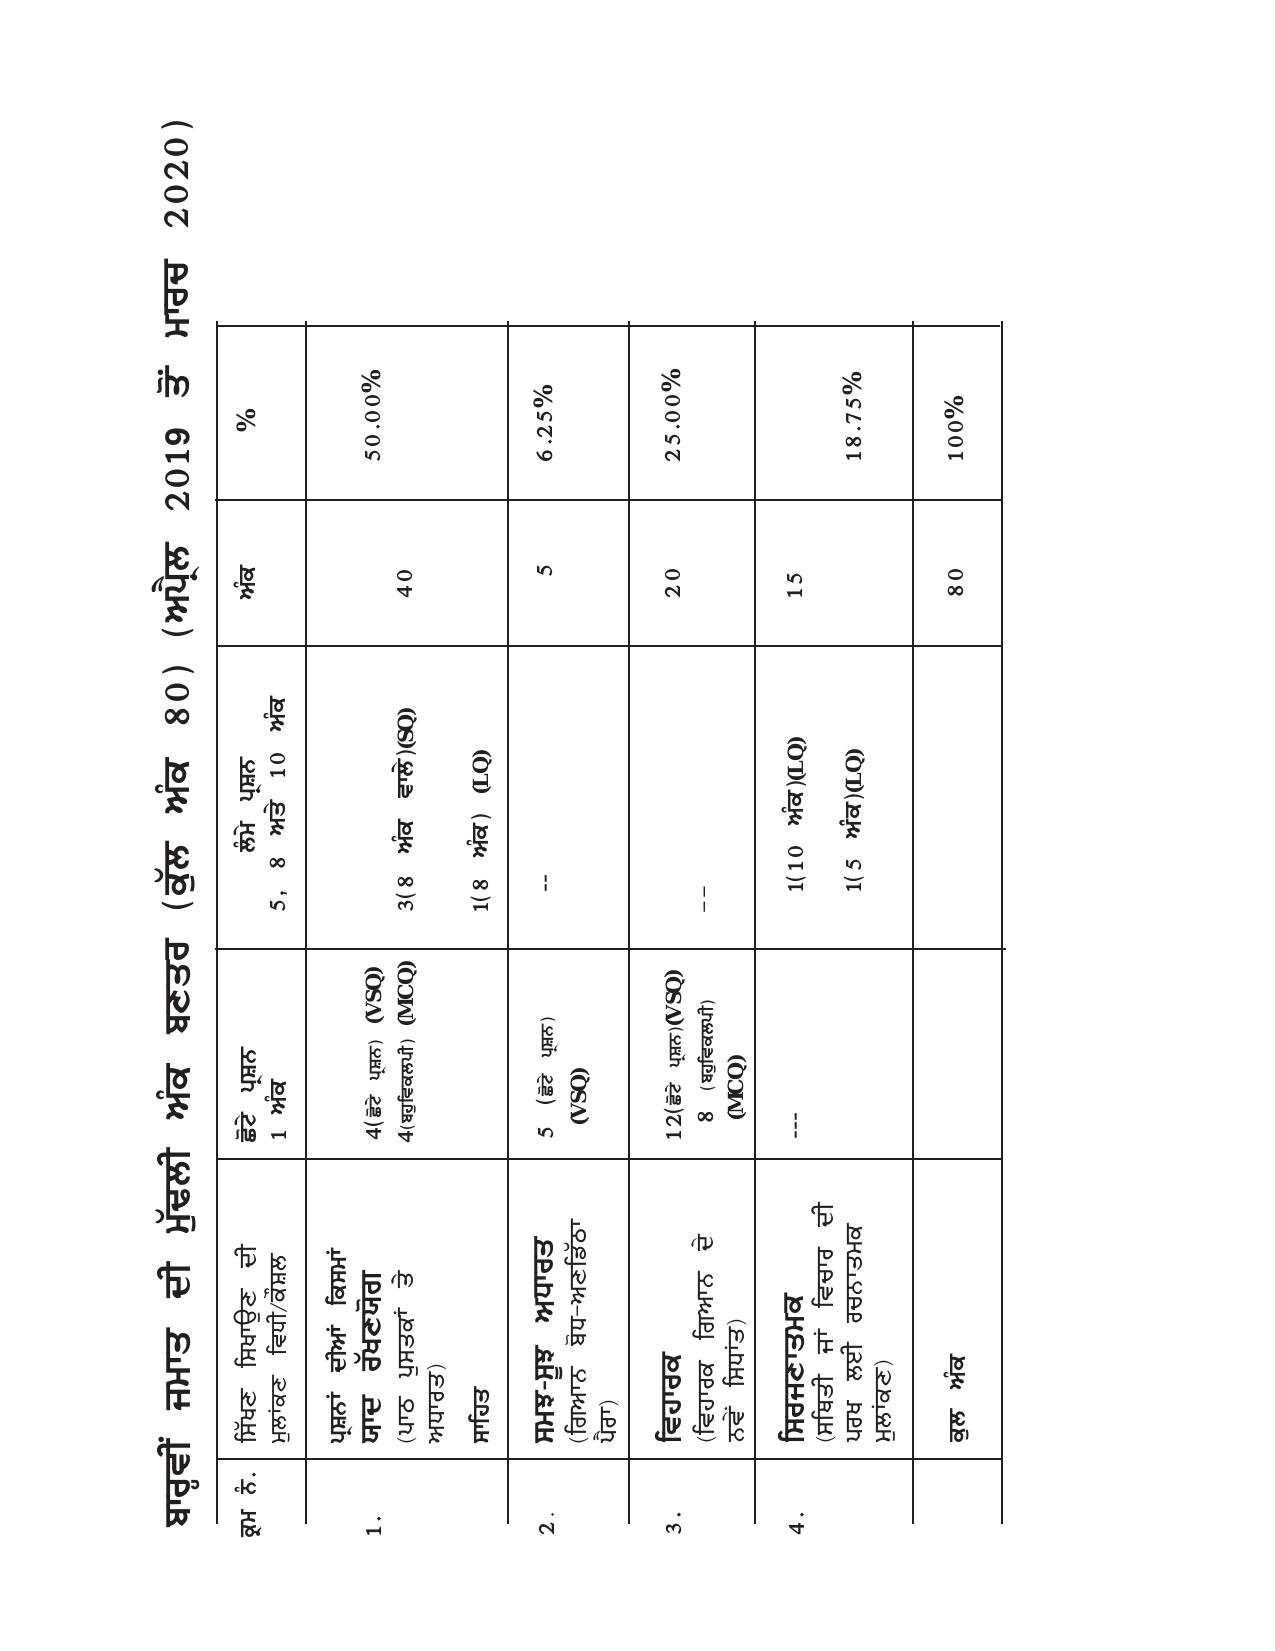 CBSE Class 12 Punjabi -Sample Paper 2019-20 - Page 5